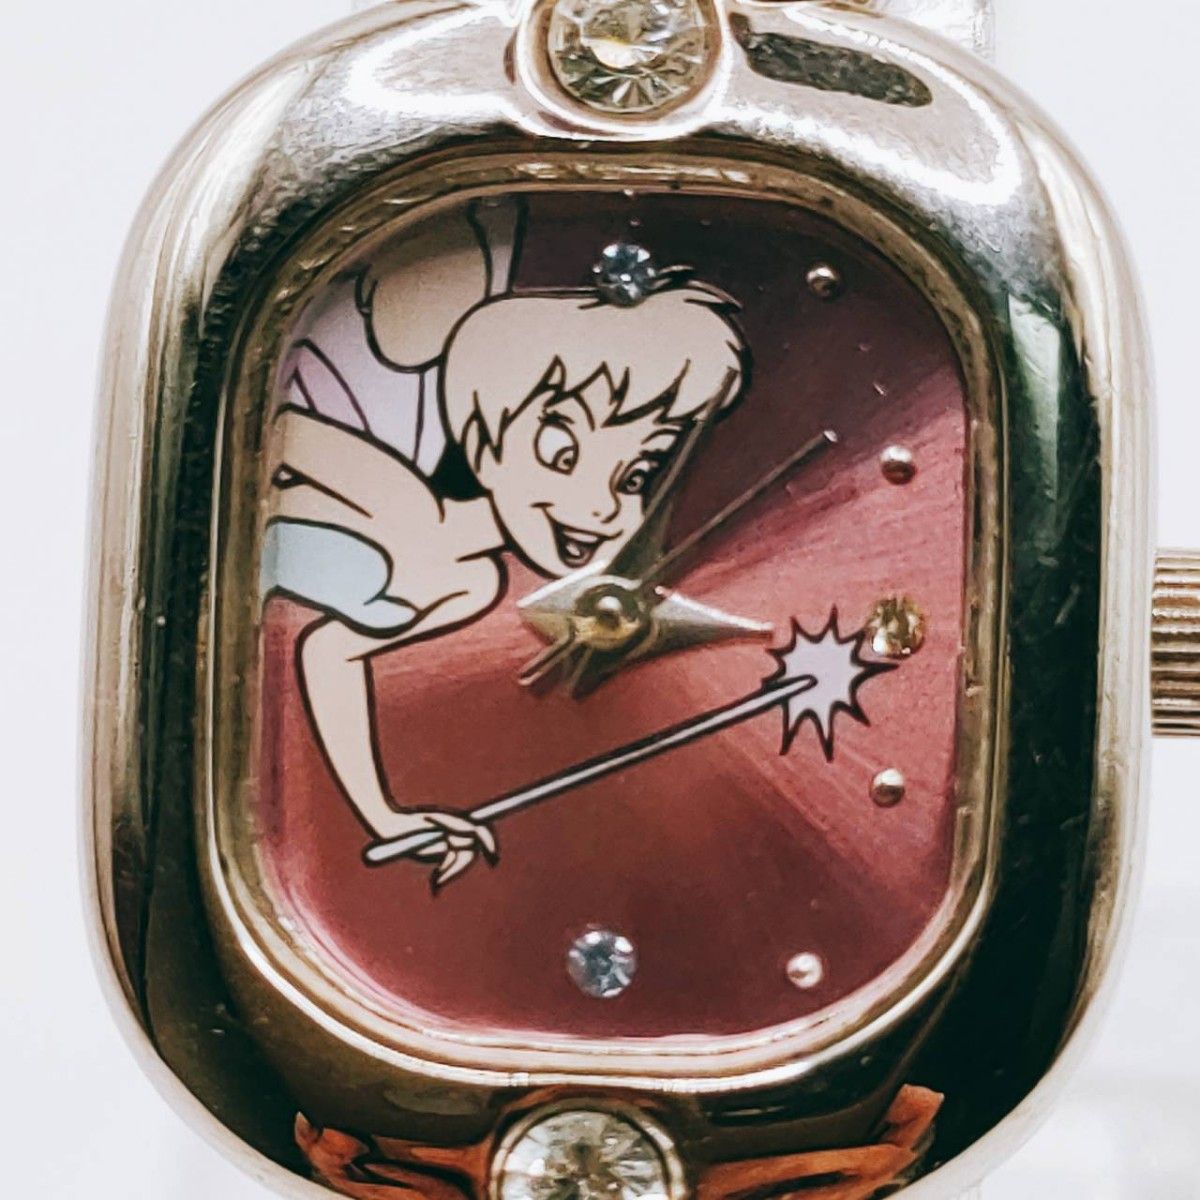 #49 Disney ティンカーベル ブレス時計 アナログ 2針 紫文字盤 シルバー色 腕時計  ヴィンテージ アンティーク